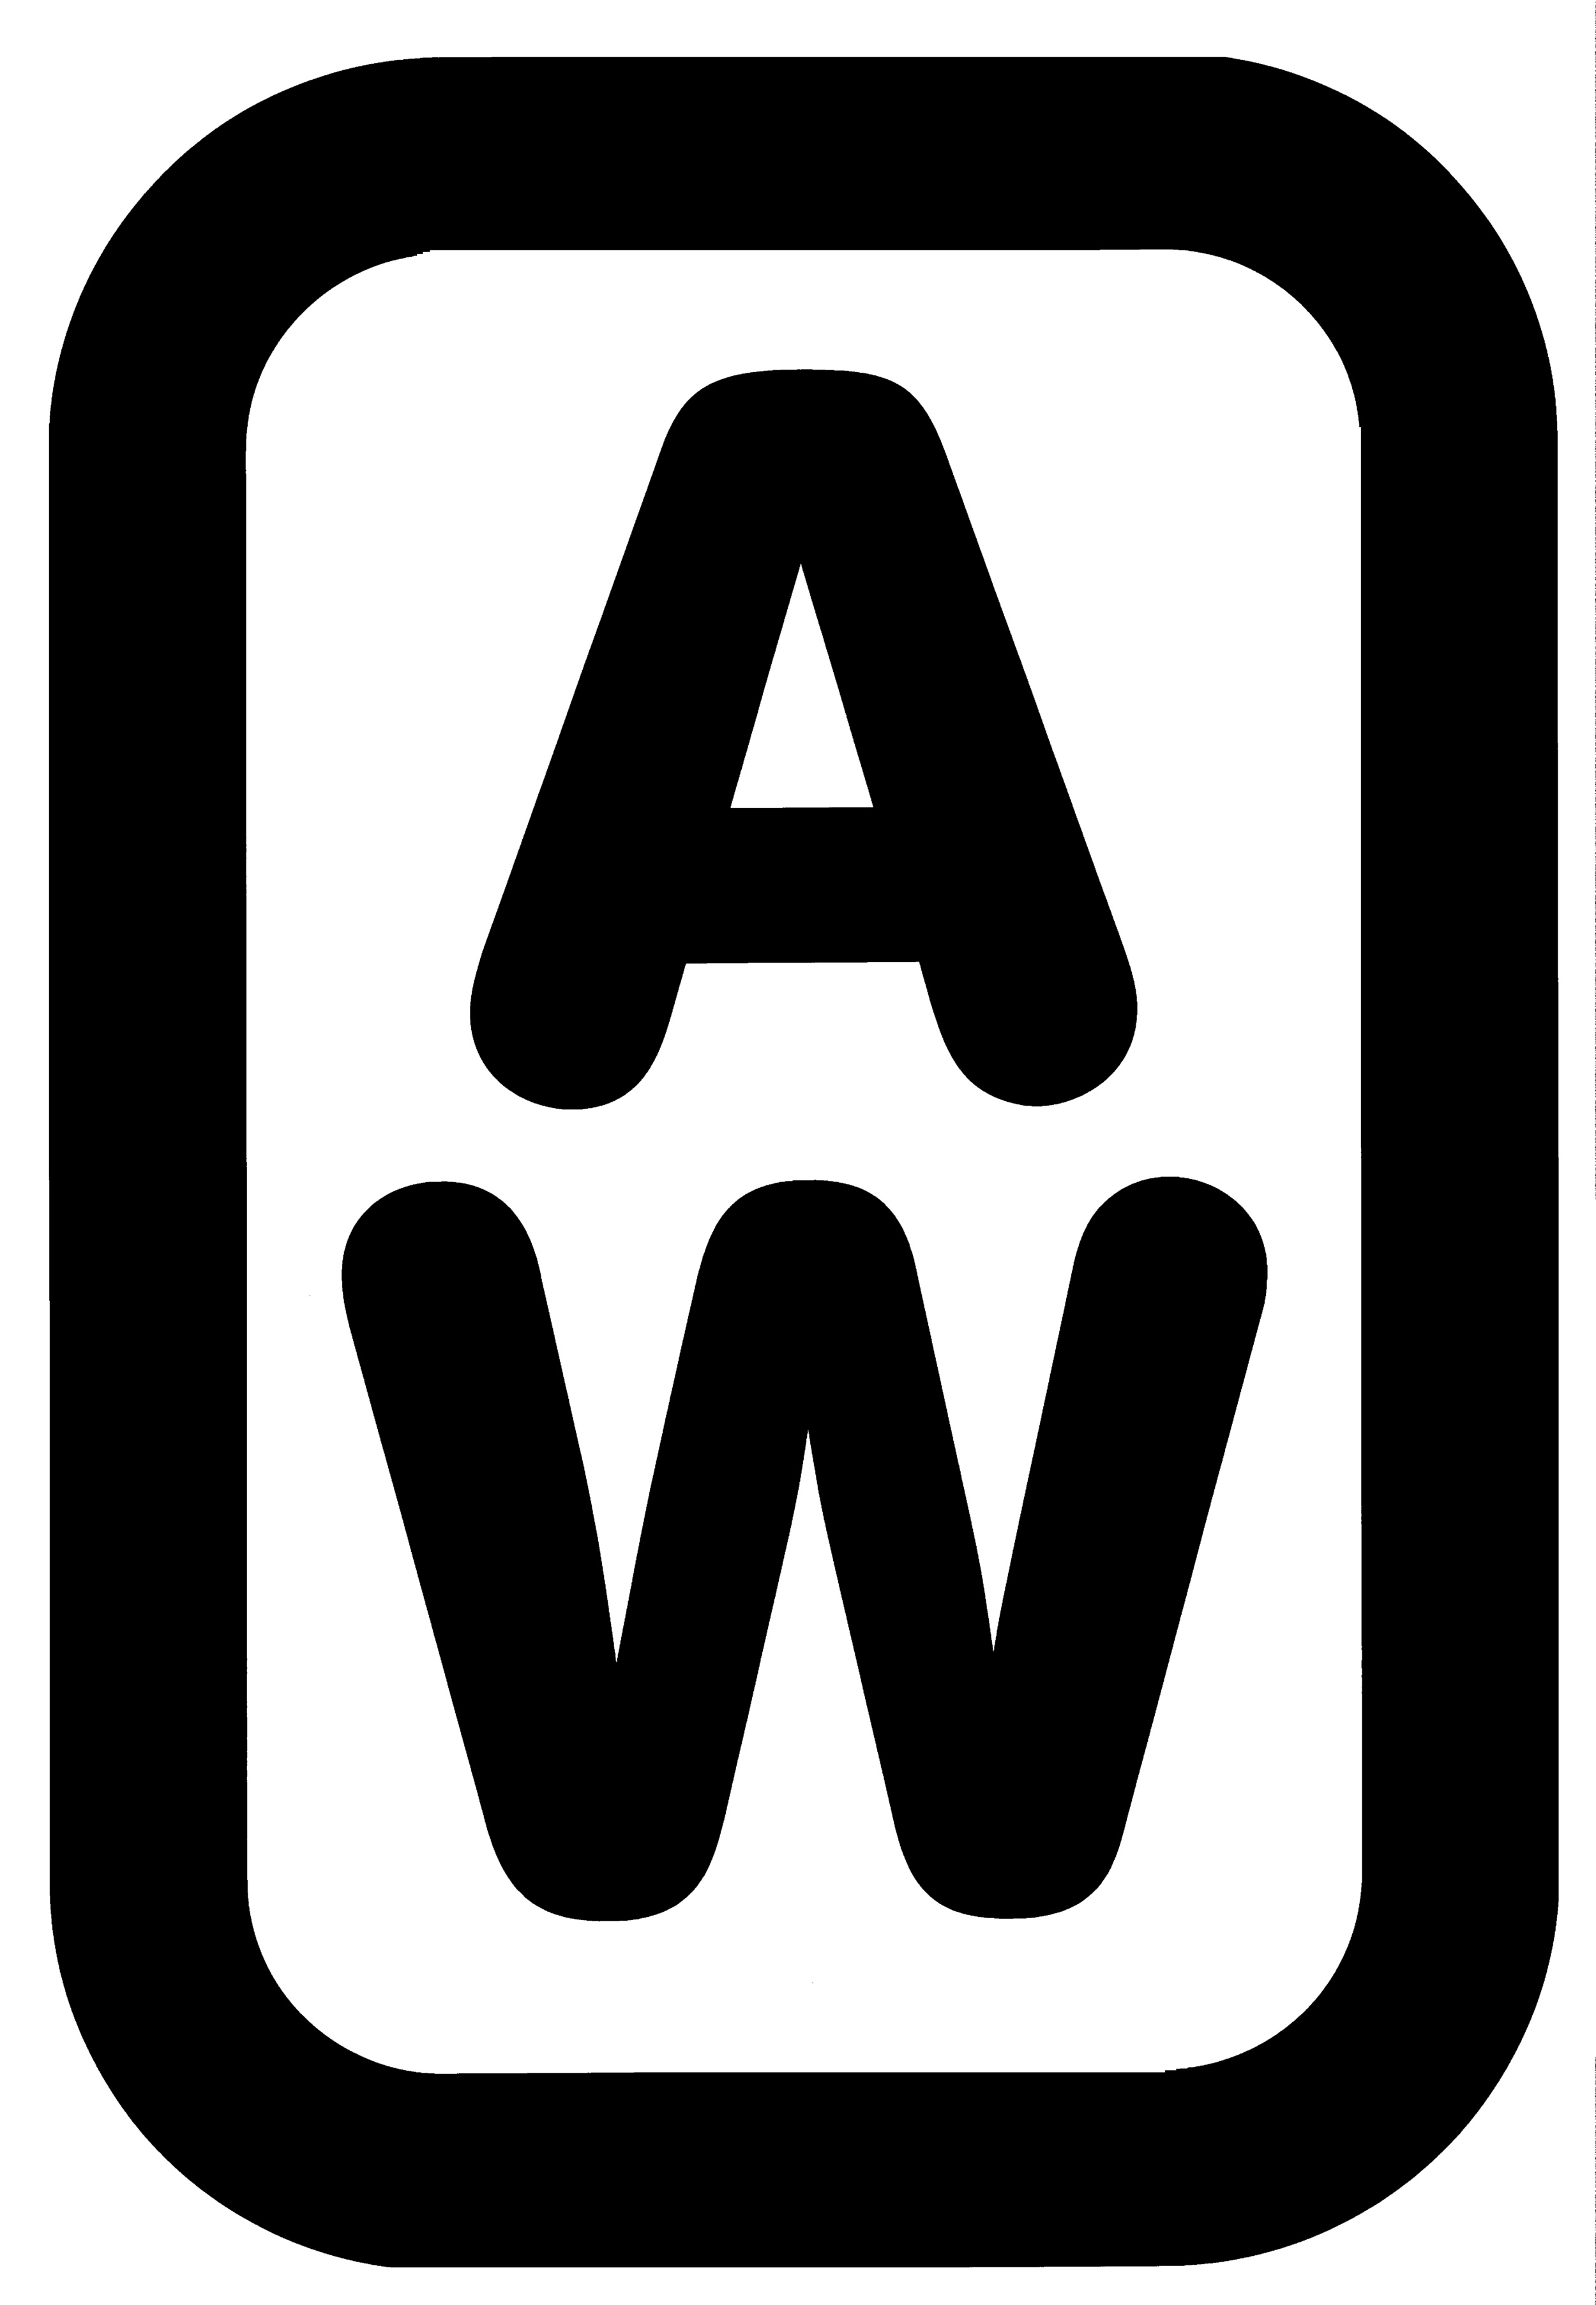 aw_logo.jpg